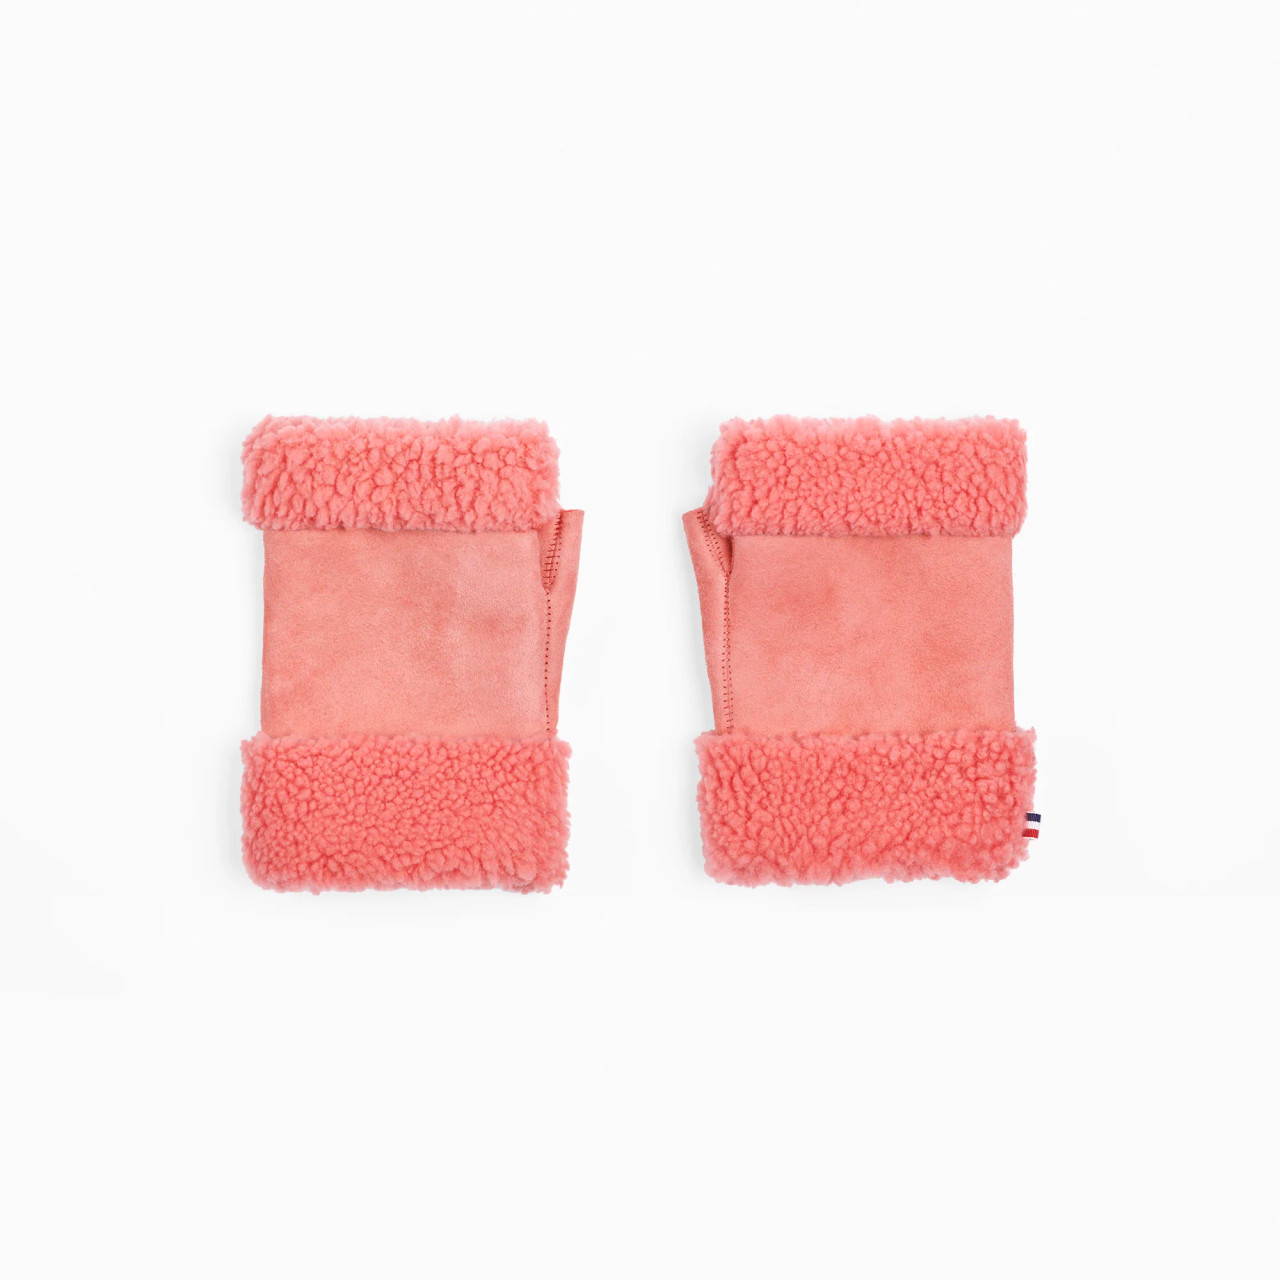 Toasties Paris: Sheepskin Bubblegum Pink Fingerless Mittens, tomfoolery london